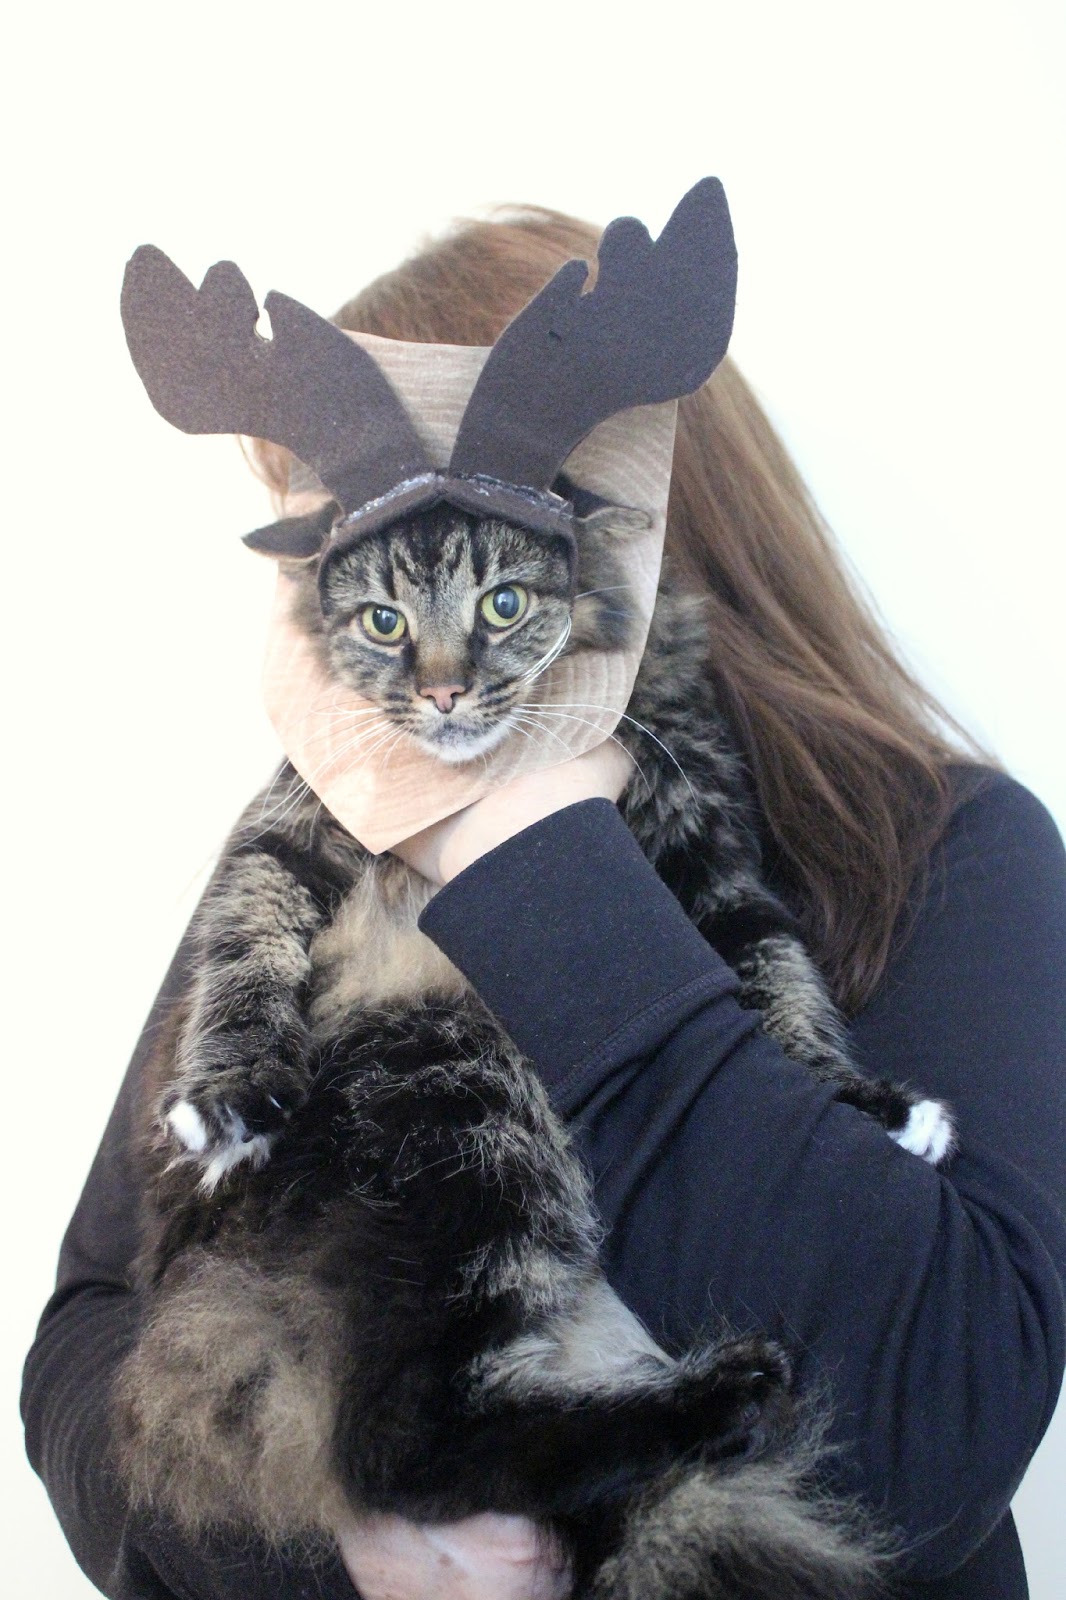 DIY moose wall-mounted head costume (via www.eatsleepmake.com)